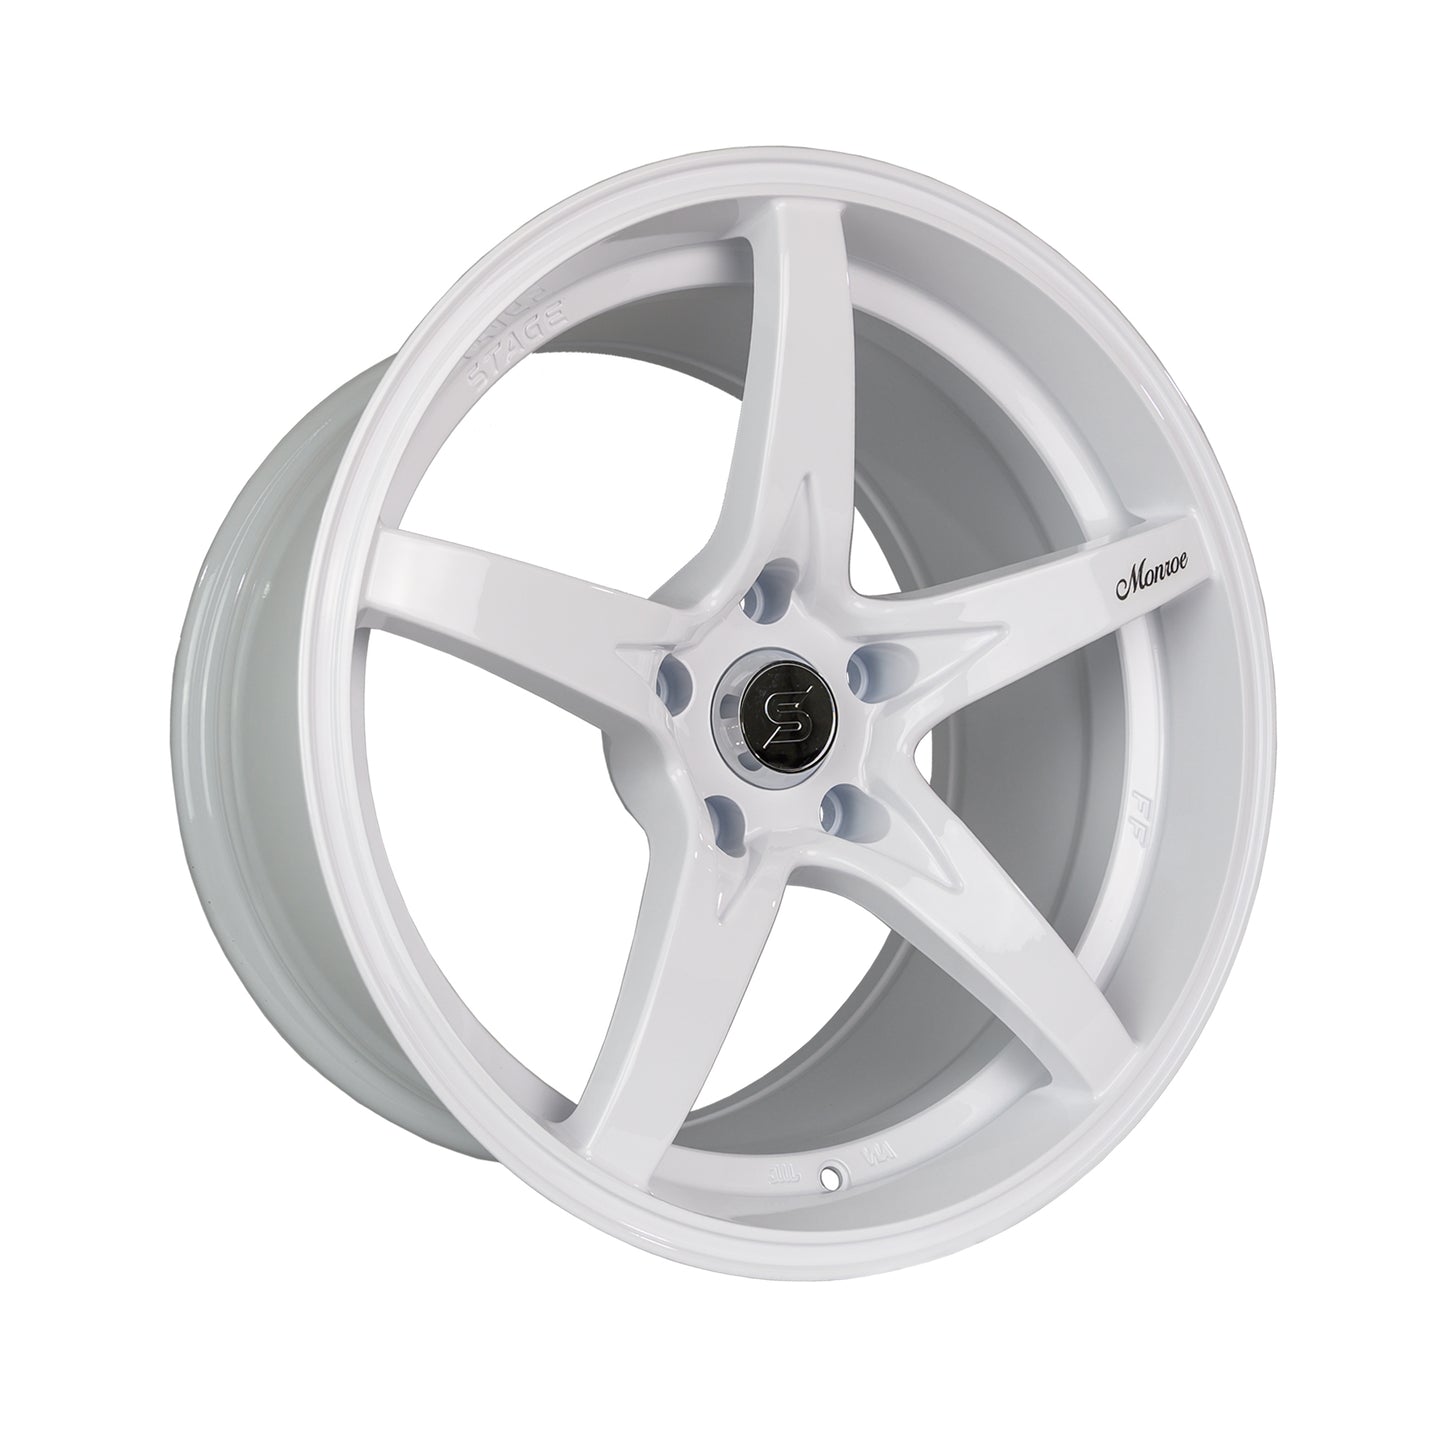 Stage Wheels Monroe 18x10 +25mm 5x114.3 CB: 73.1 Color: White